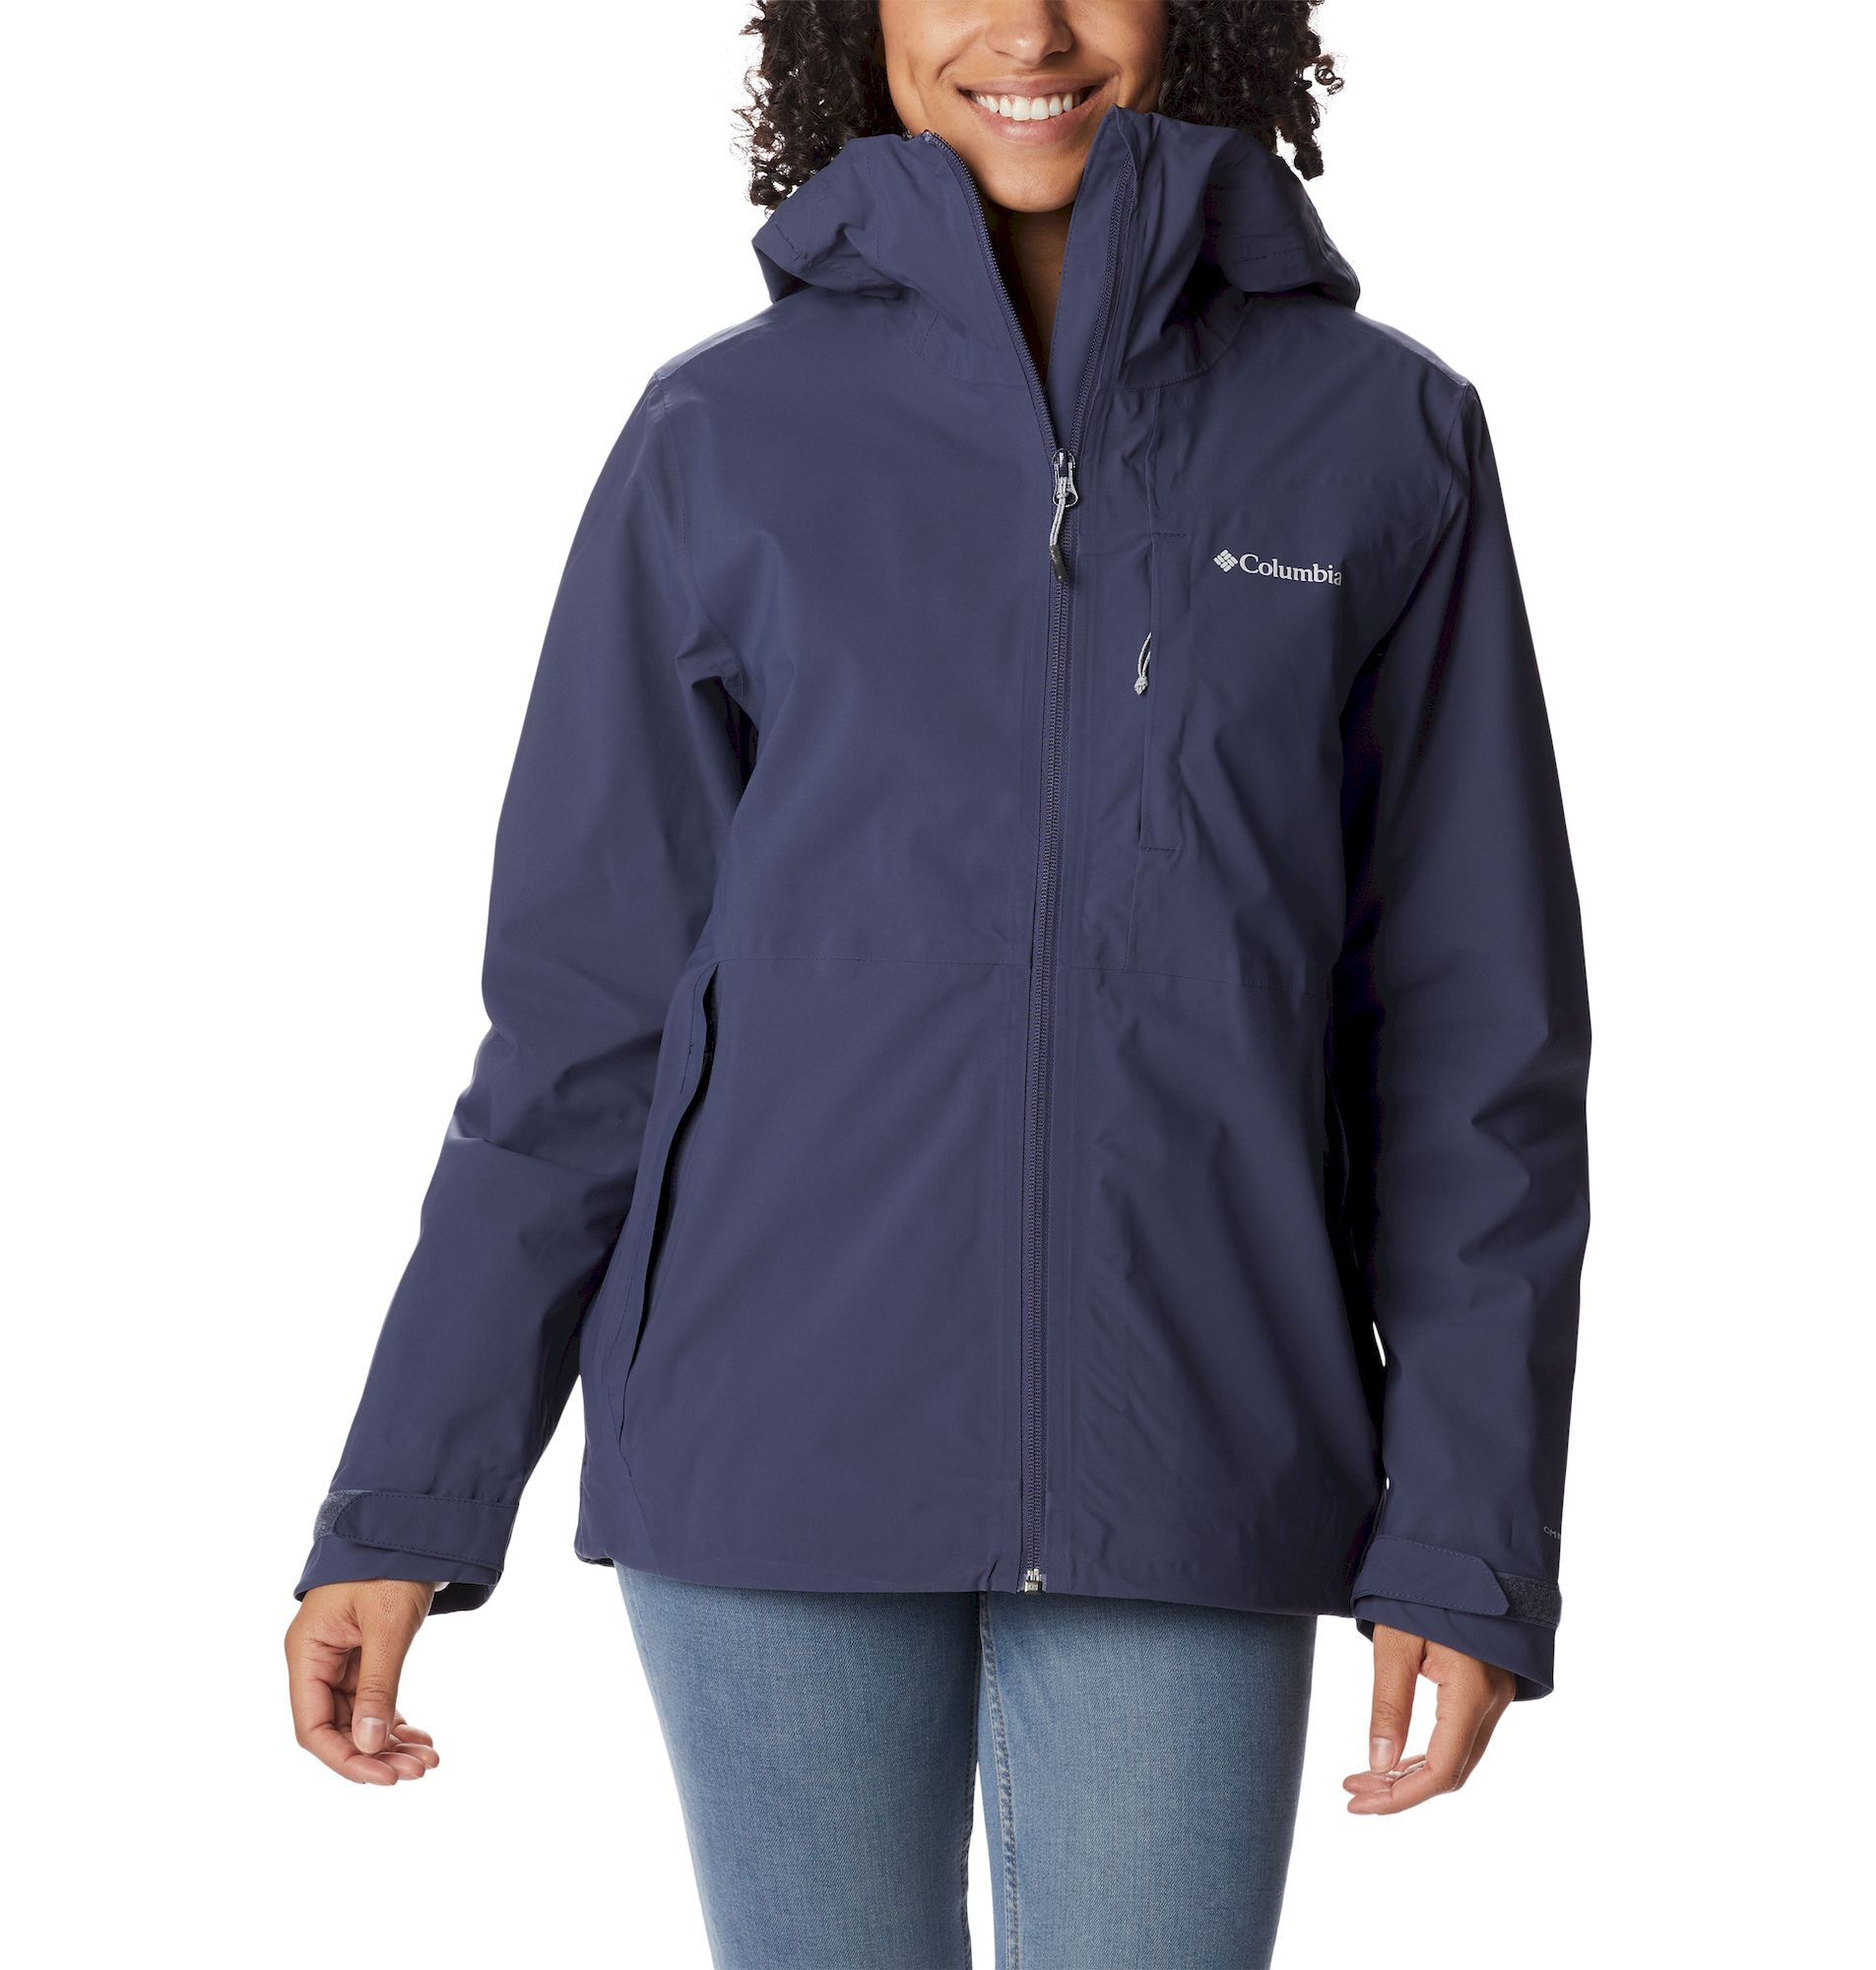 Columbia Omni-Tech Ampli-Dry Shell - Waterproof jacket - Women's